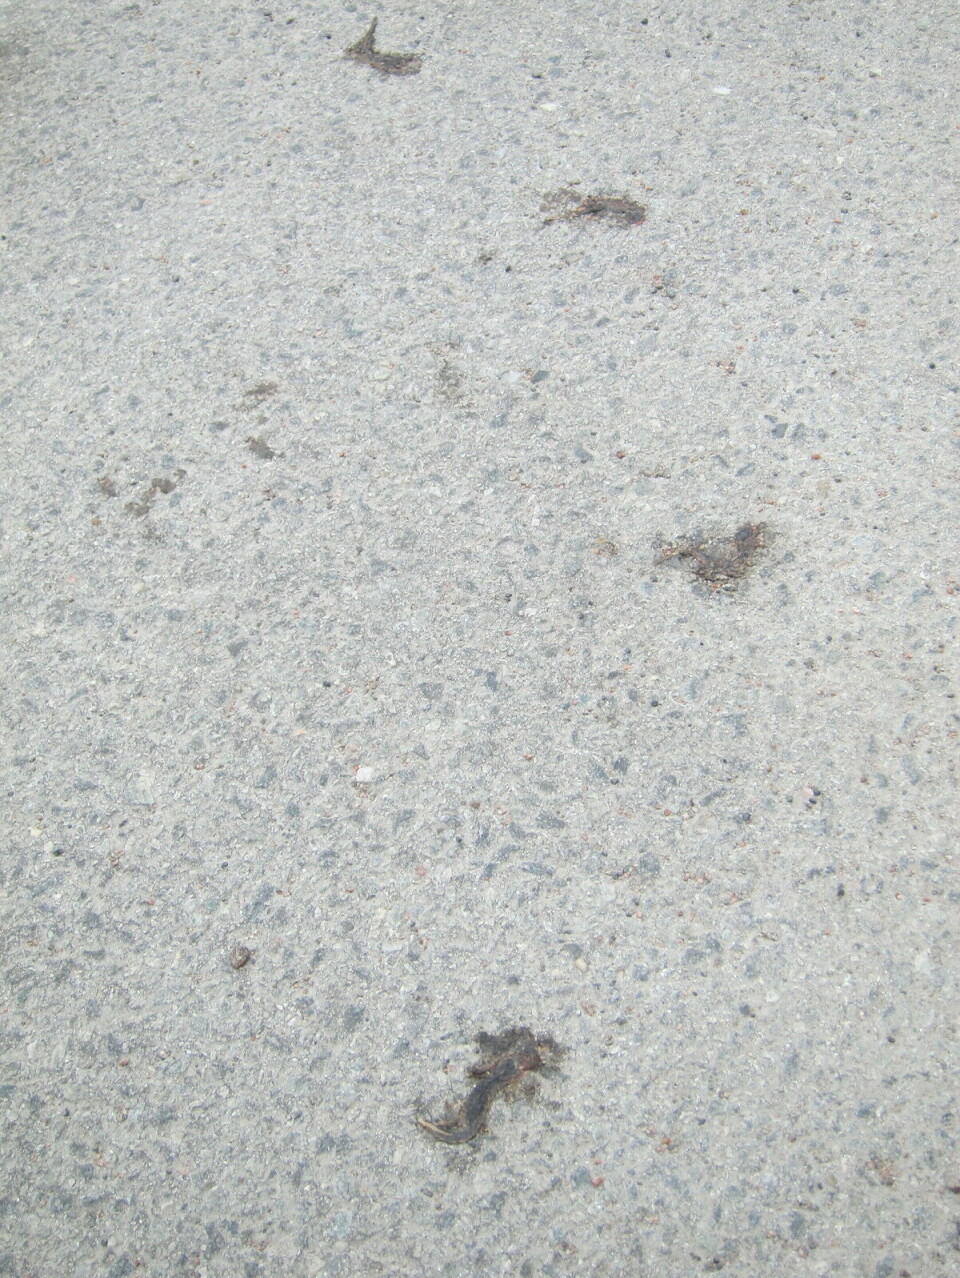 Flere flate salamandere på asfalt.